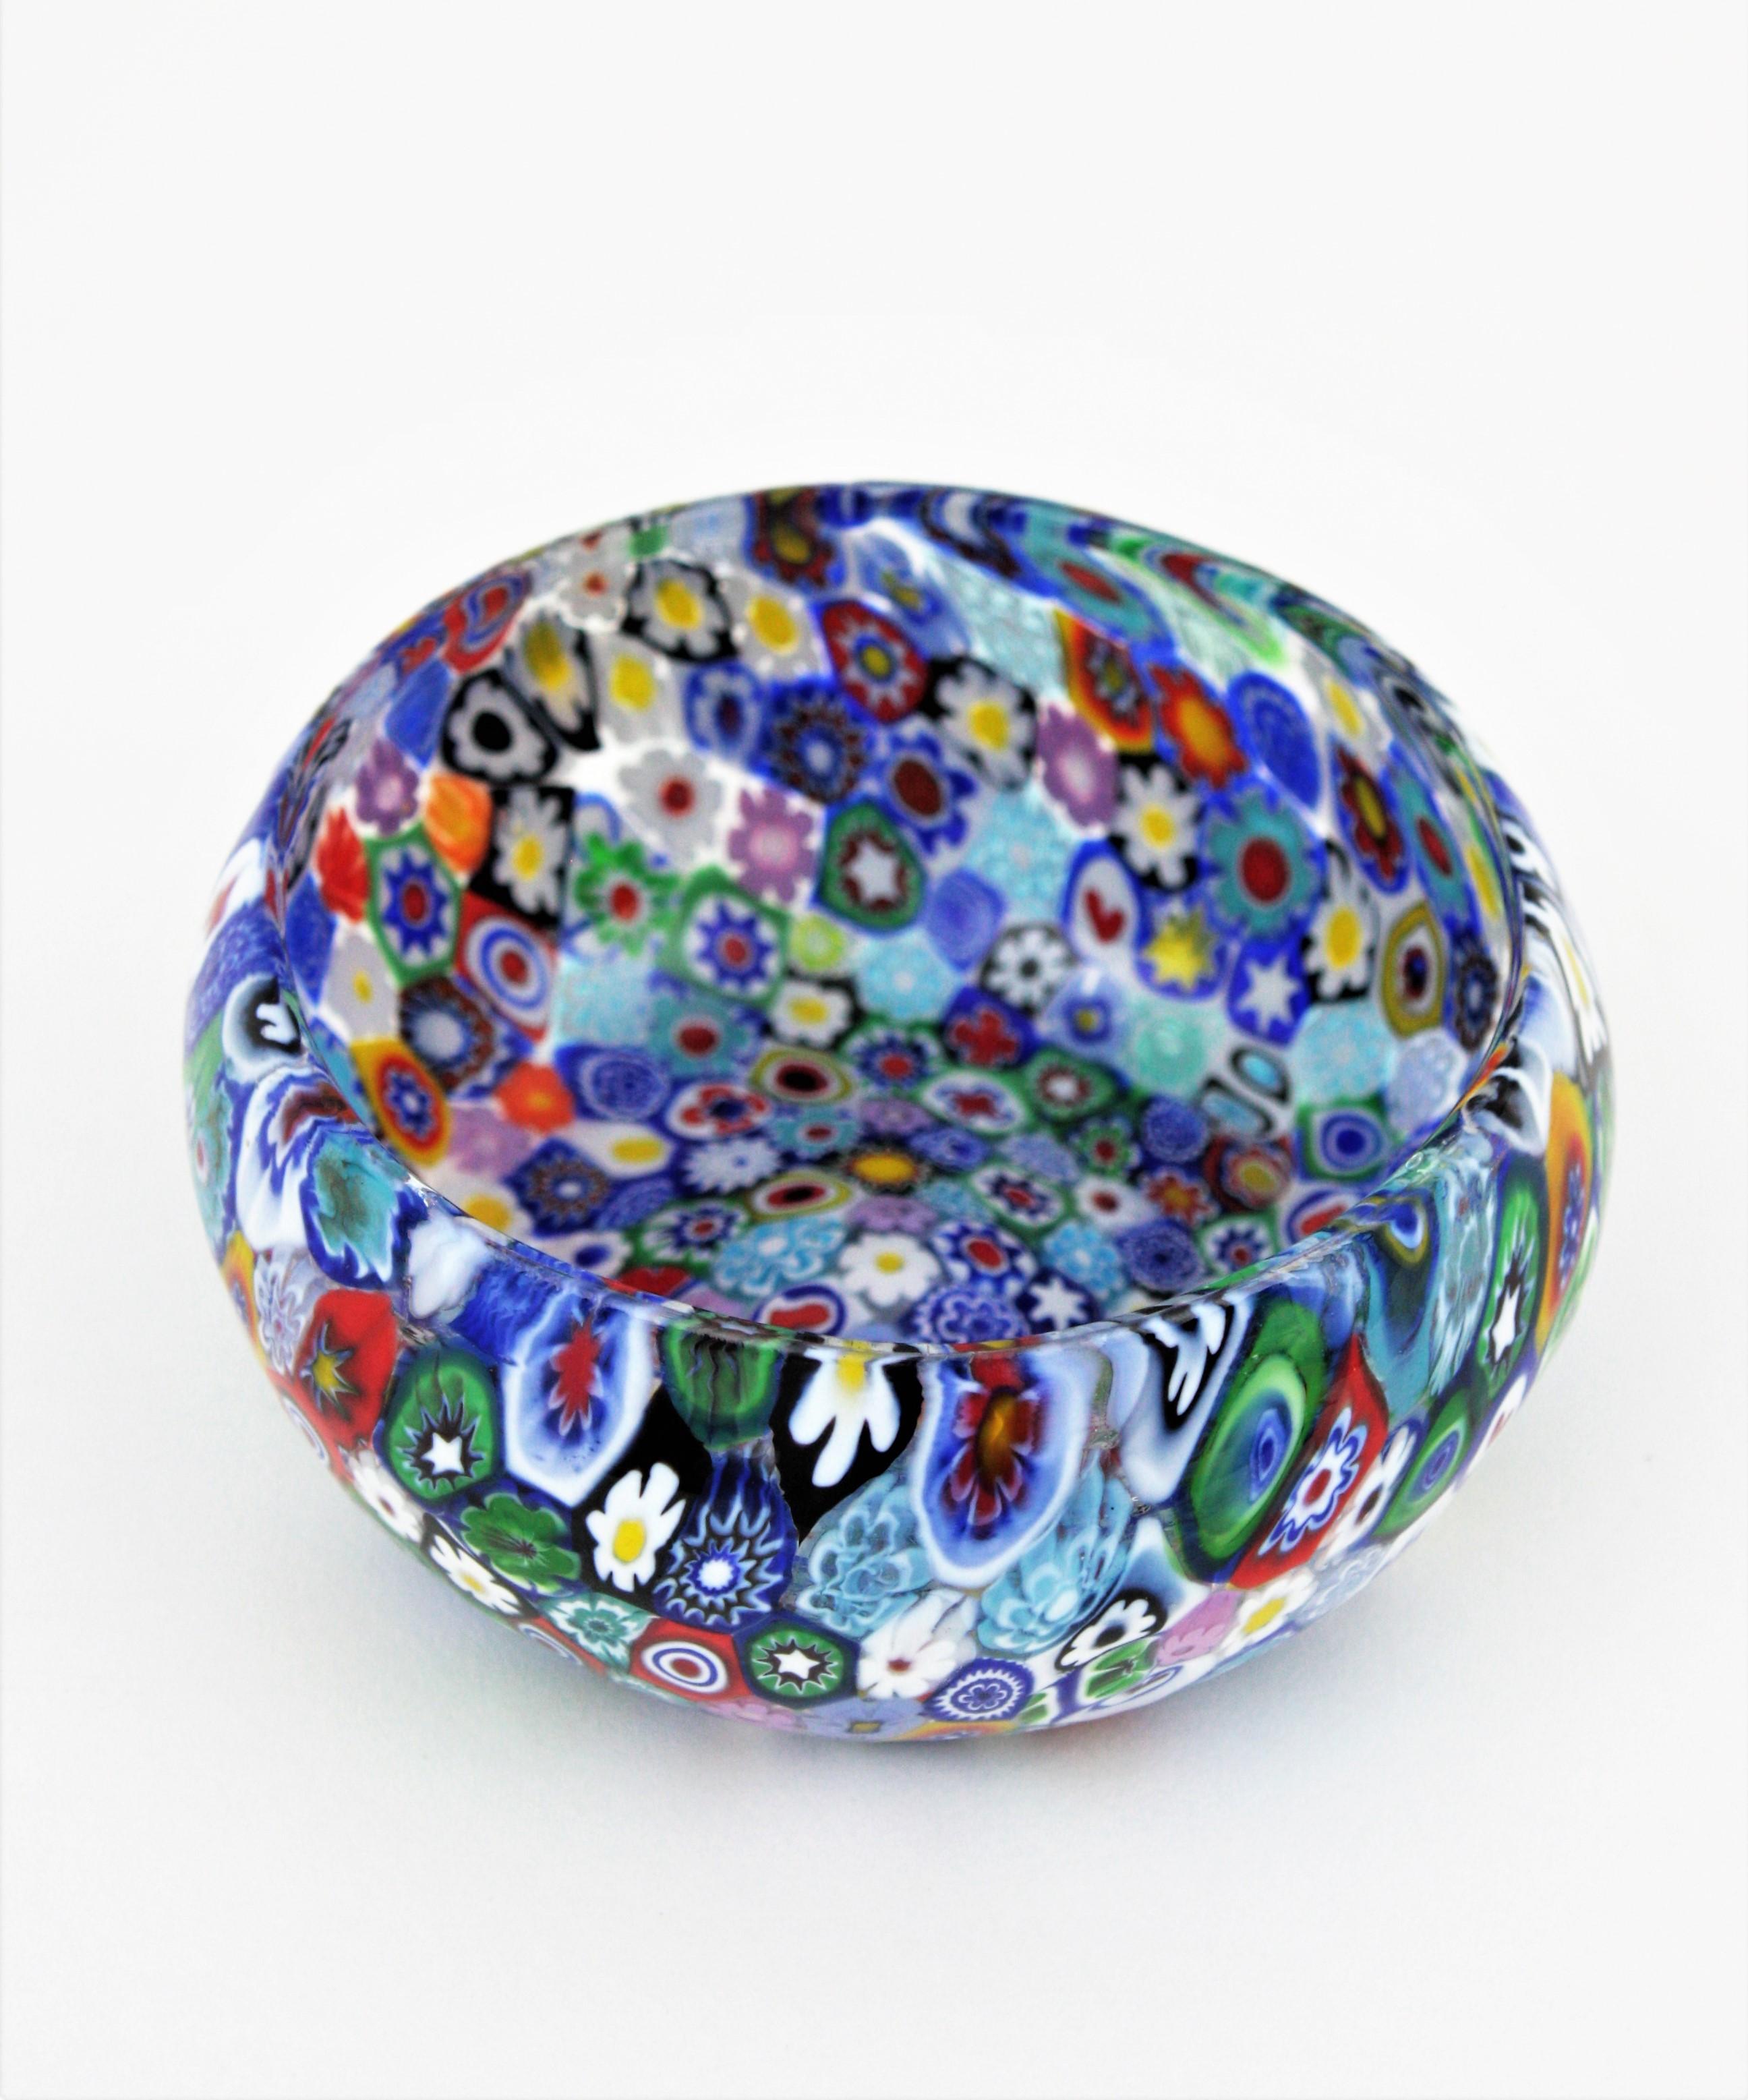 Murano Fratelli Toso Murrine Multi Color Italian Art Glass Bowl, 1950s For Sale 8